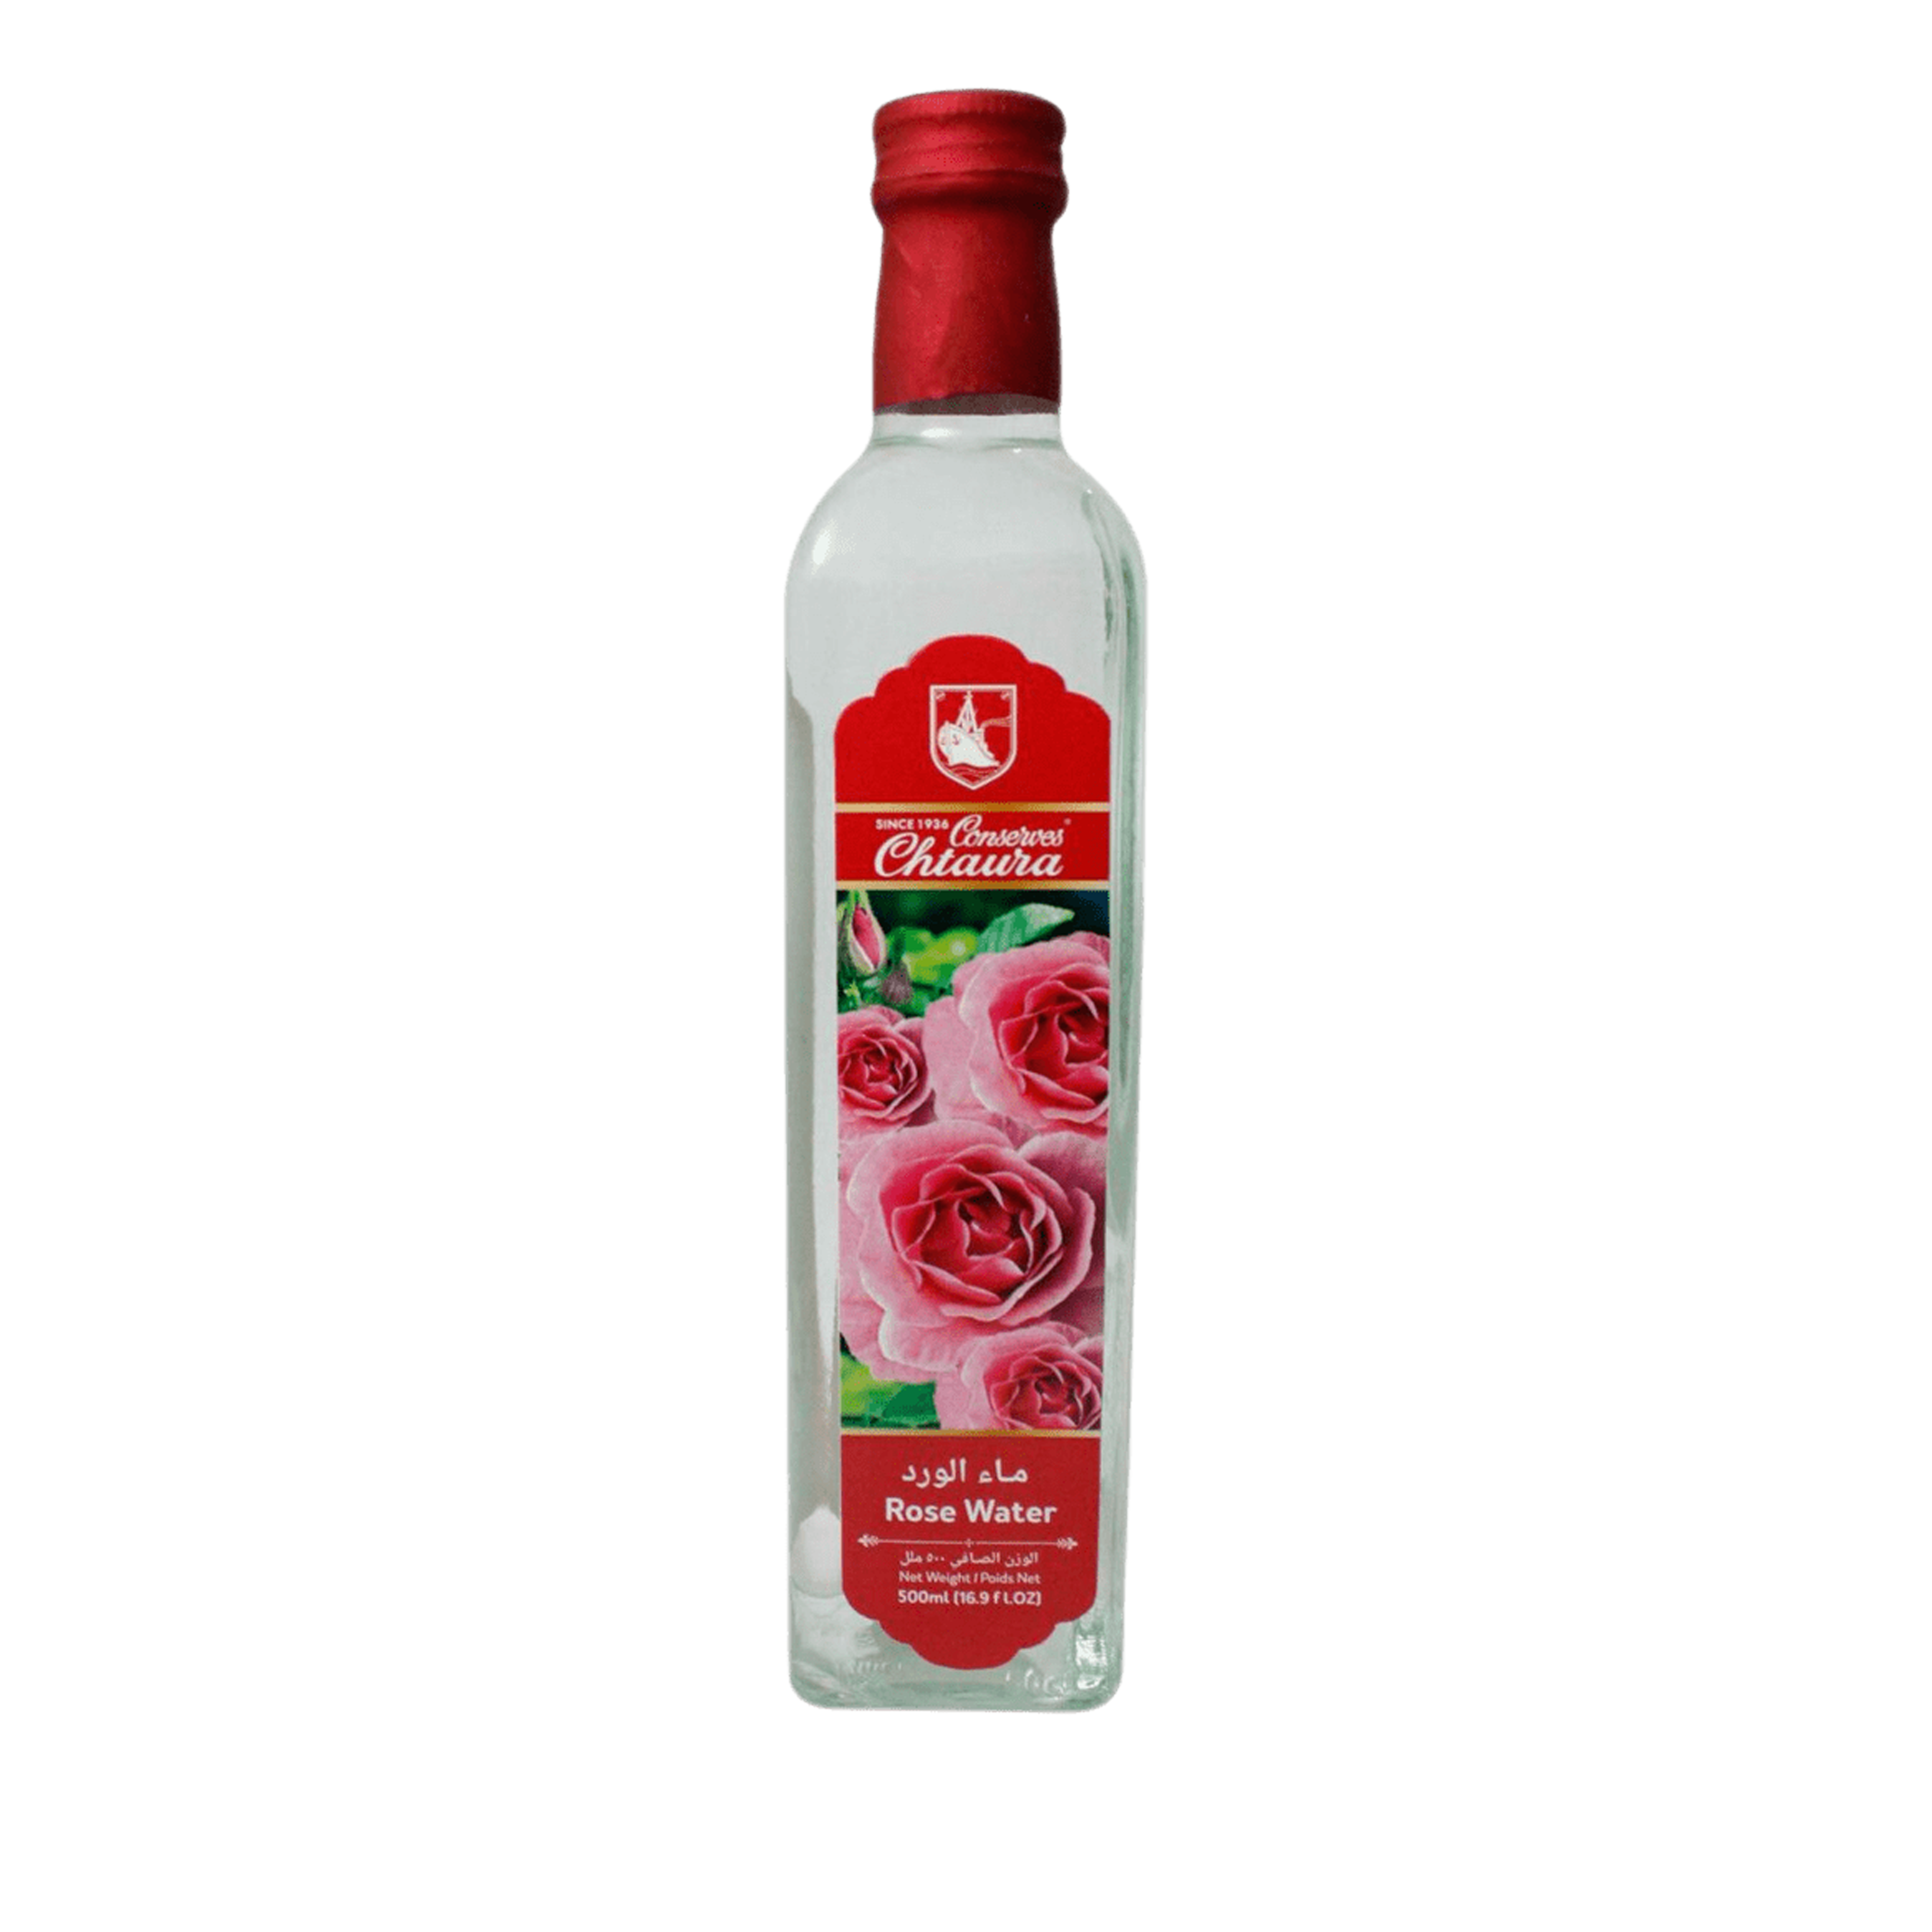 Rose Water - Honey & Spice